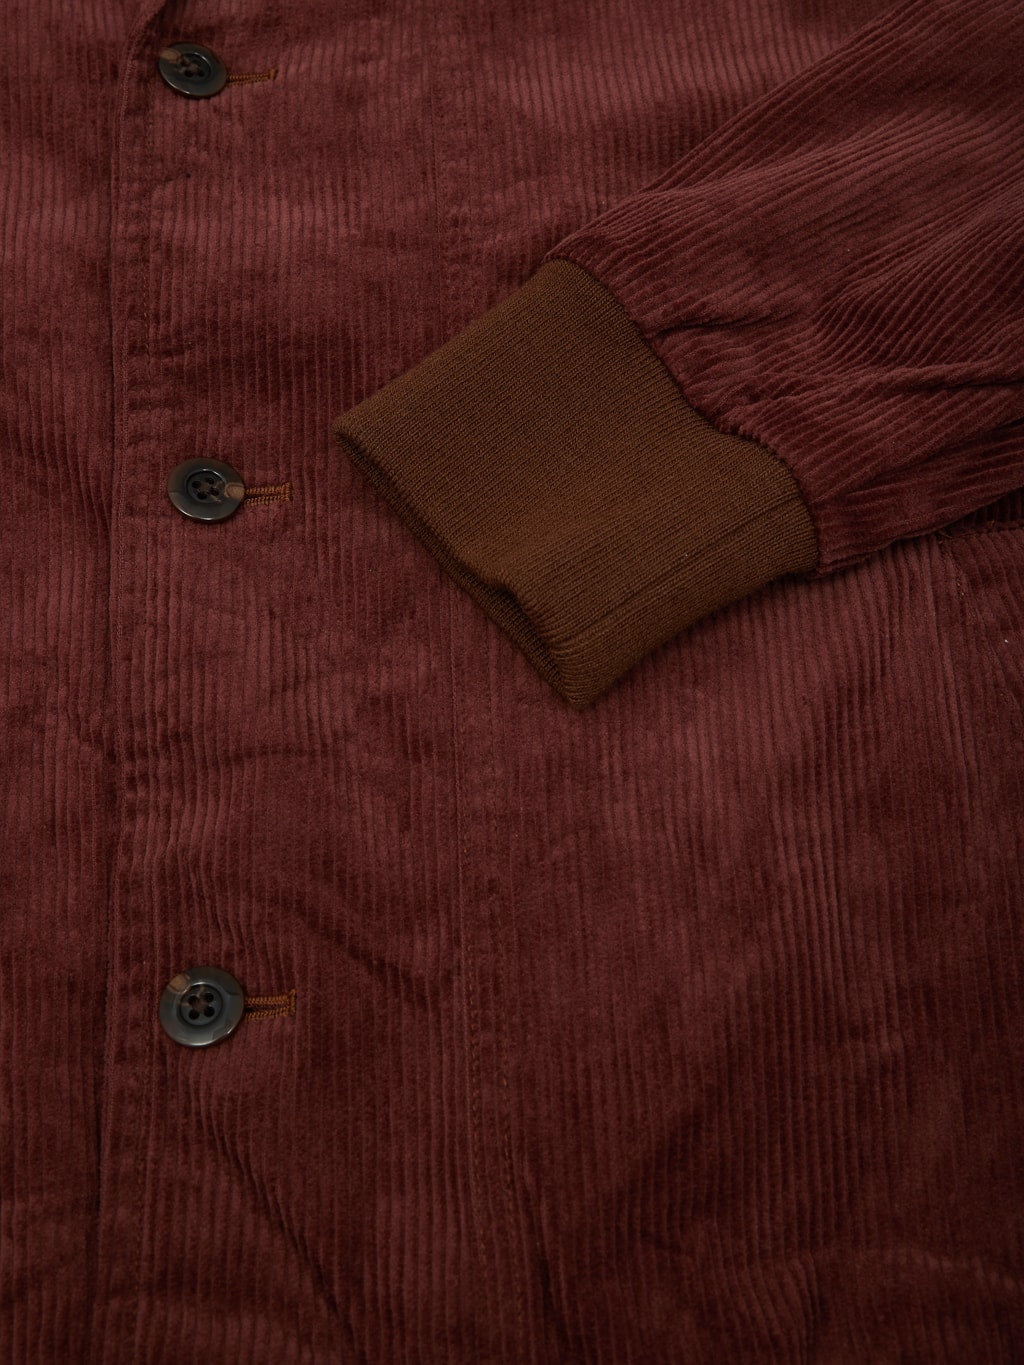 Tanuki Sazanami Corduro mud Dyed brown Jacket fabric closeup